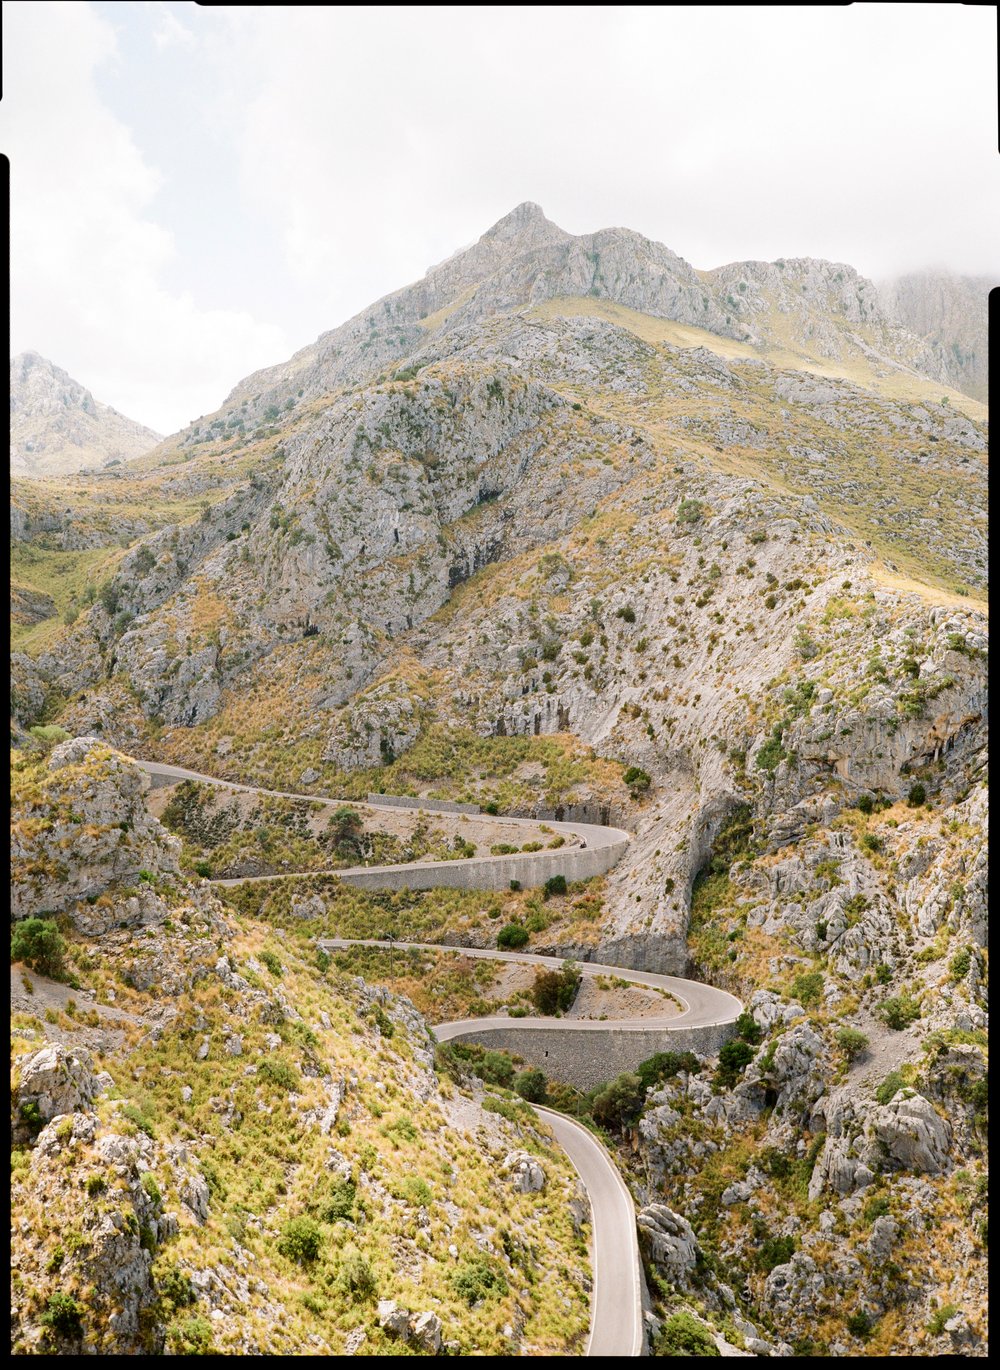  bending roads going down the mountain of Mallorca, Spain 